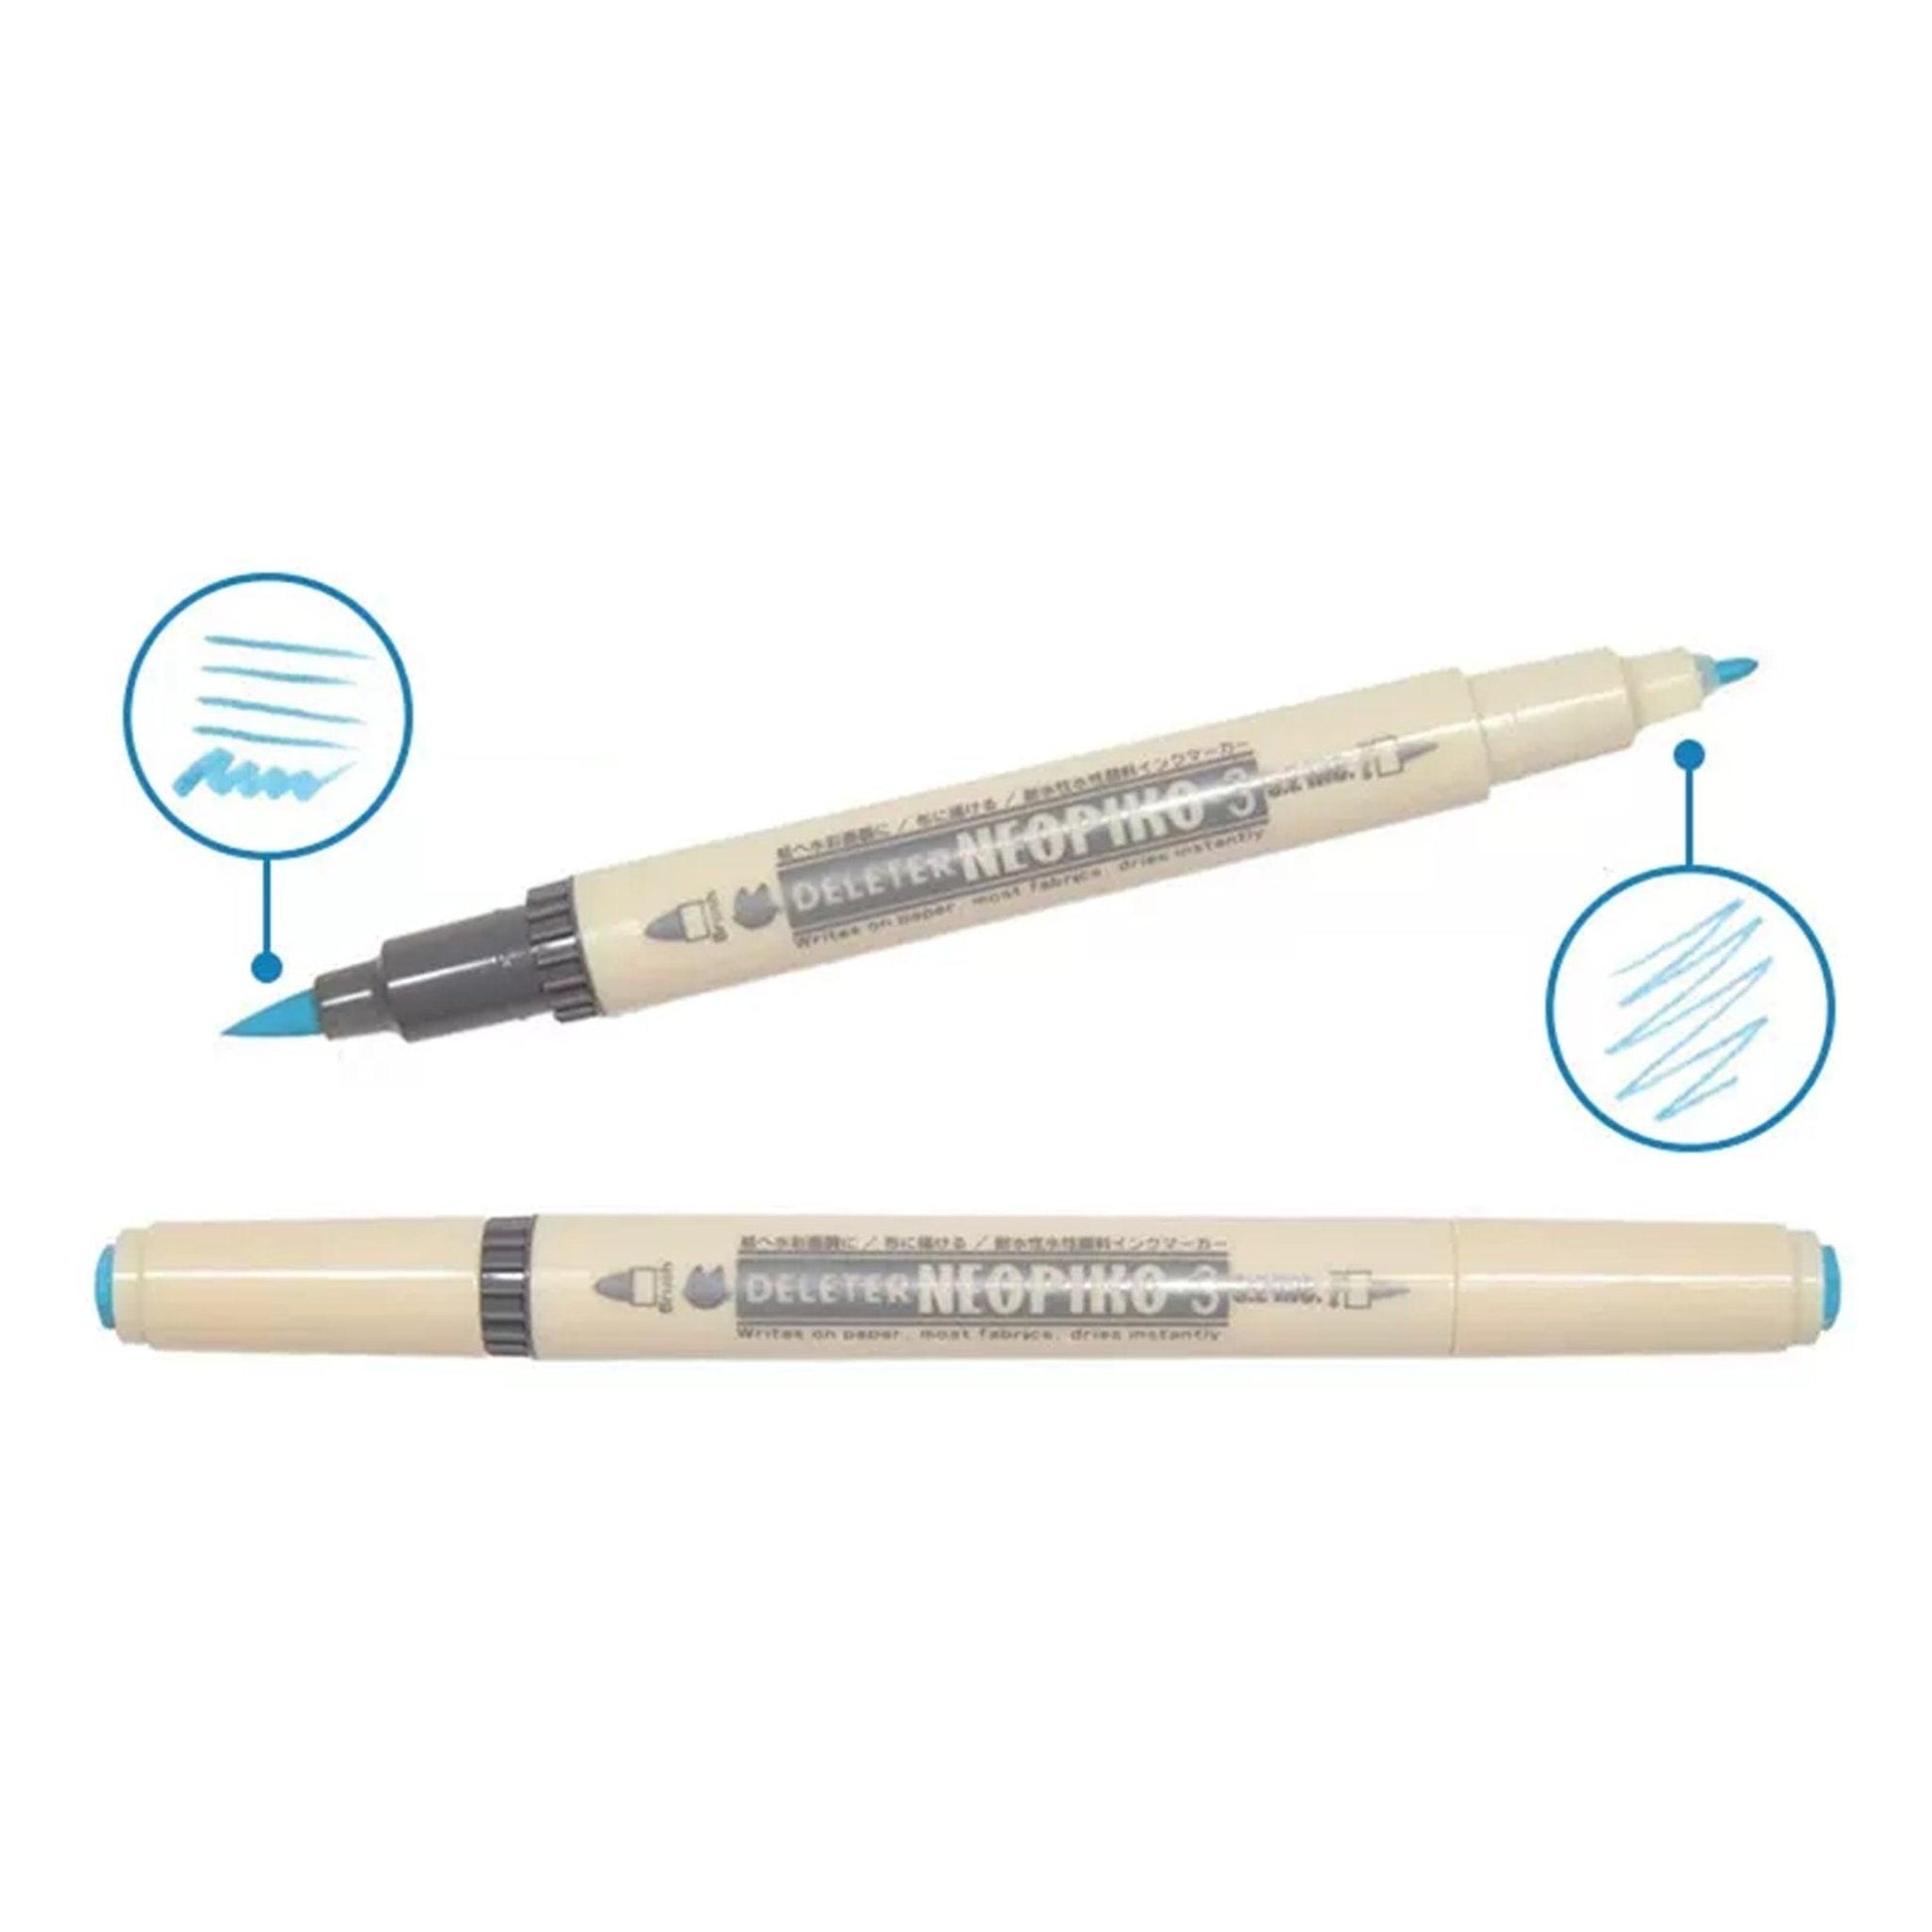 Deli Double Head Art Pens,Fineliner Pens,Technical Drawing Pen